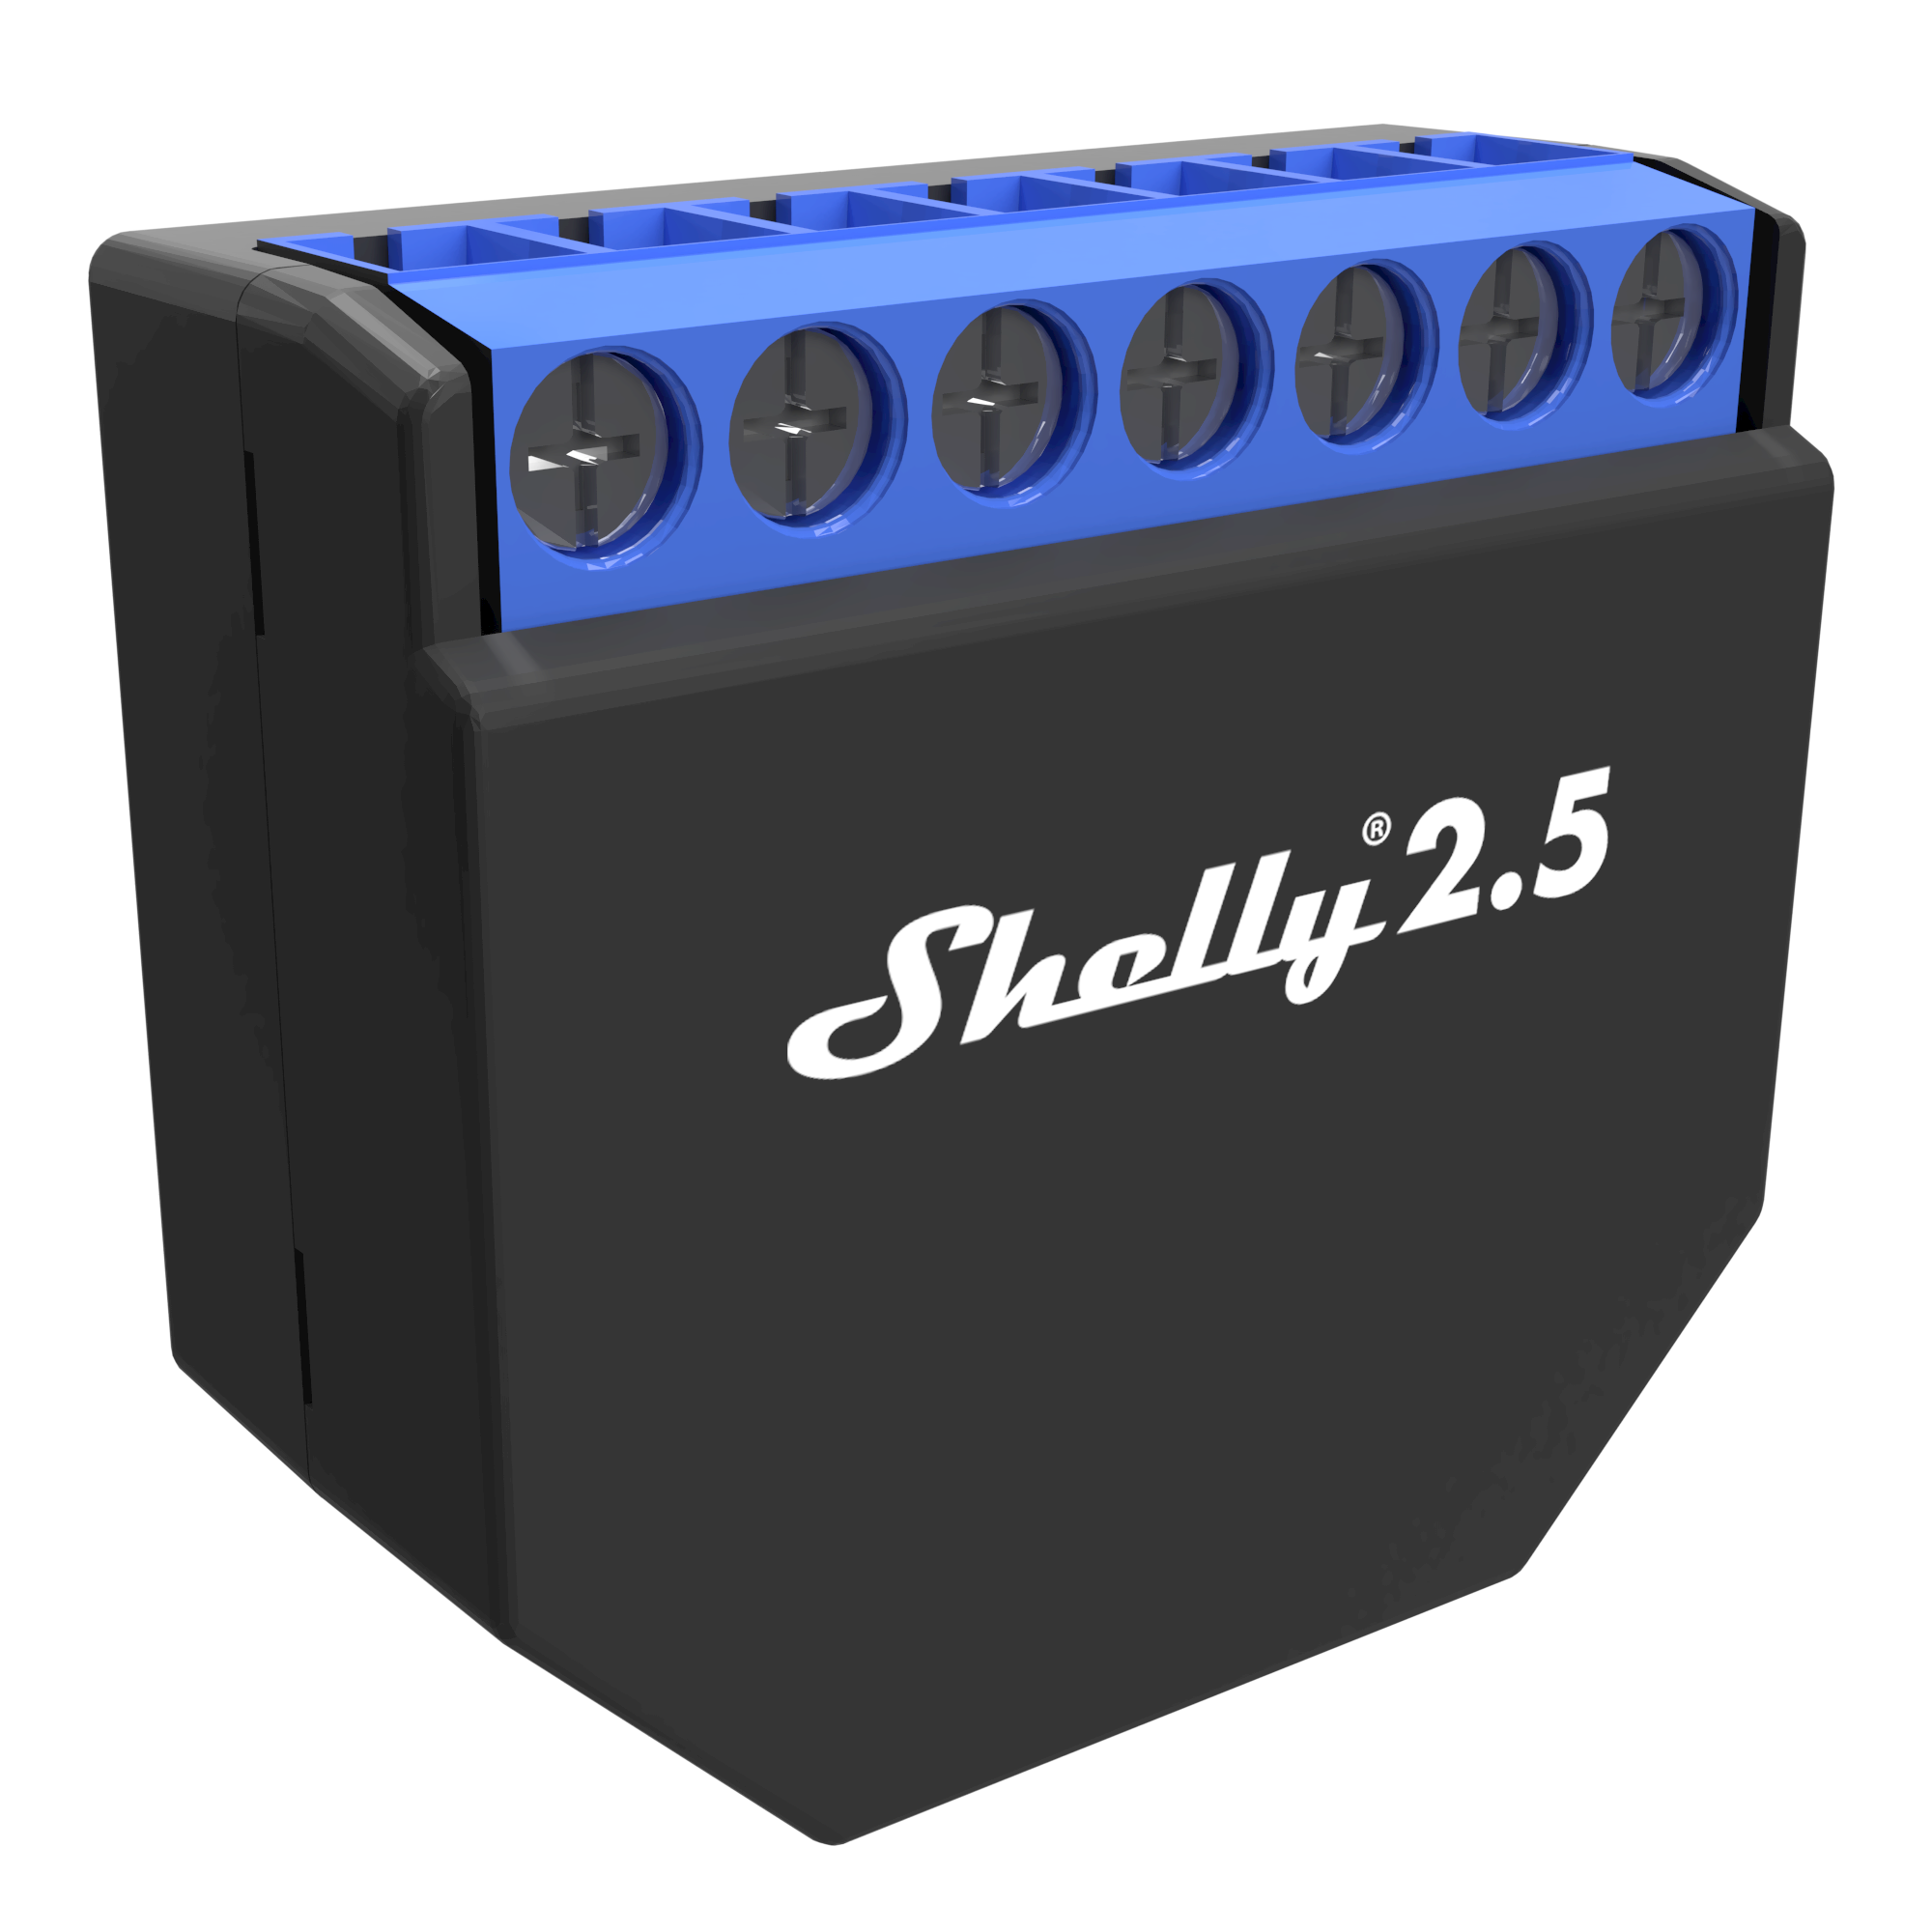 Shelly Shelly 2.5